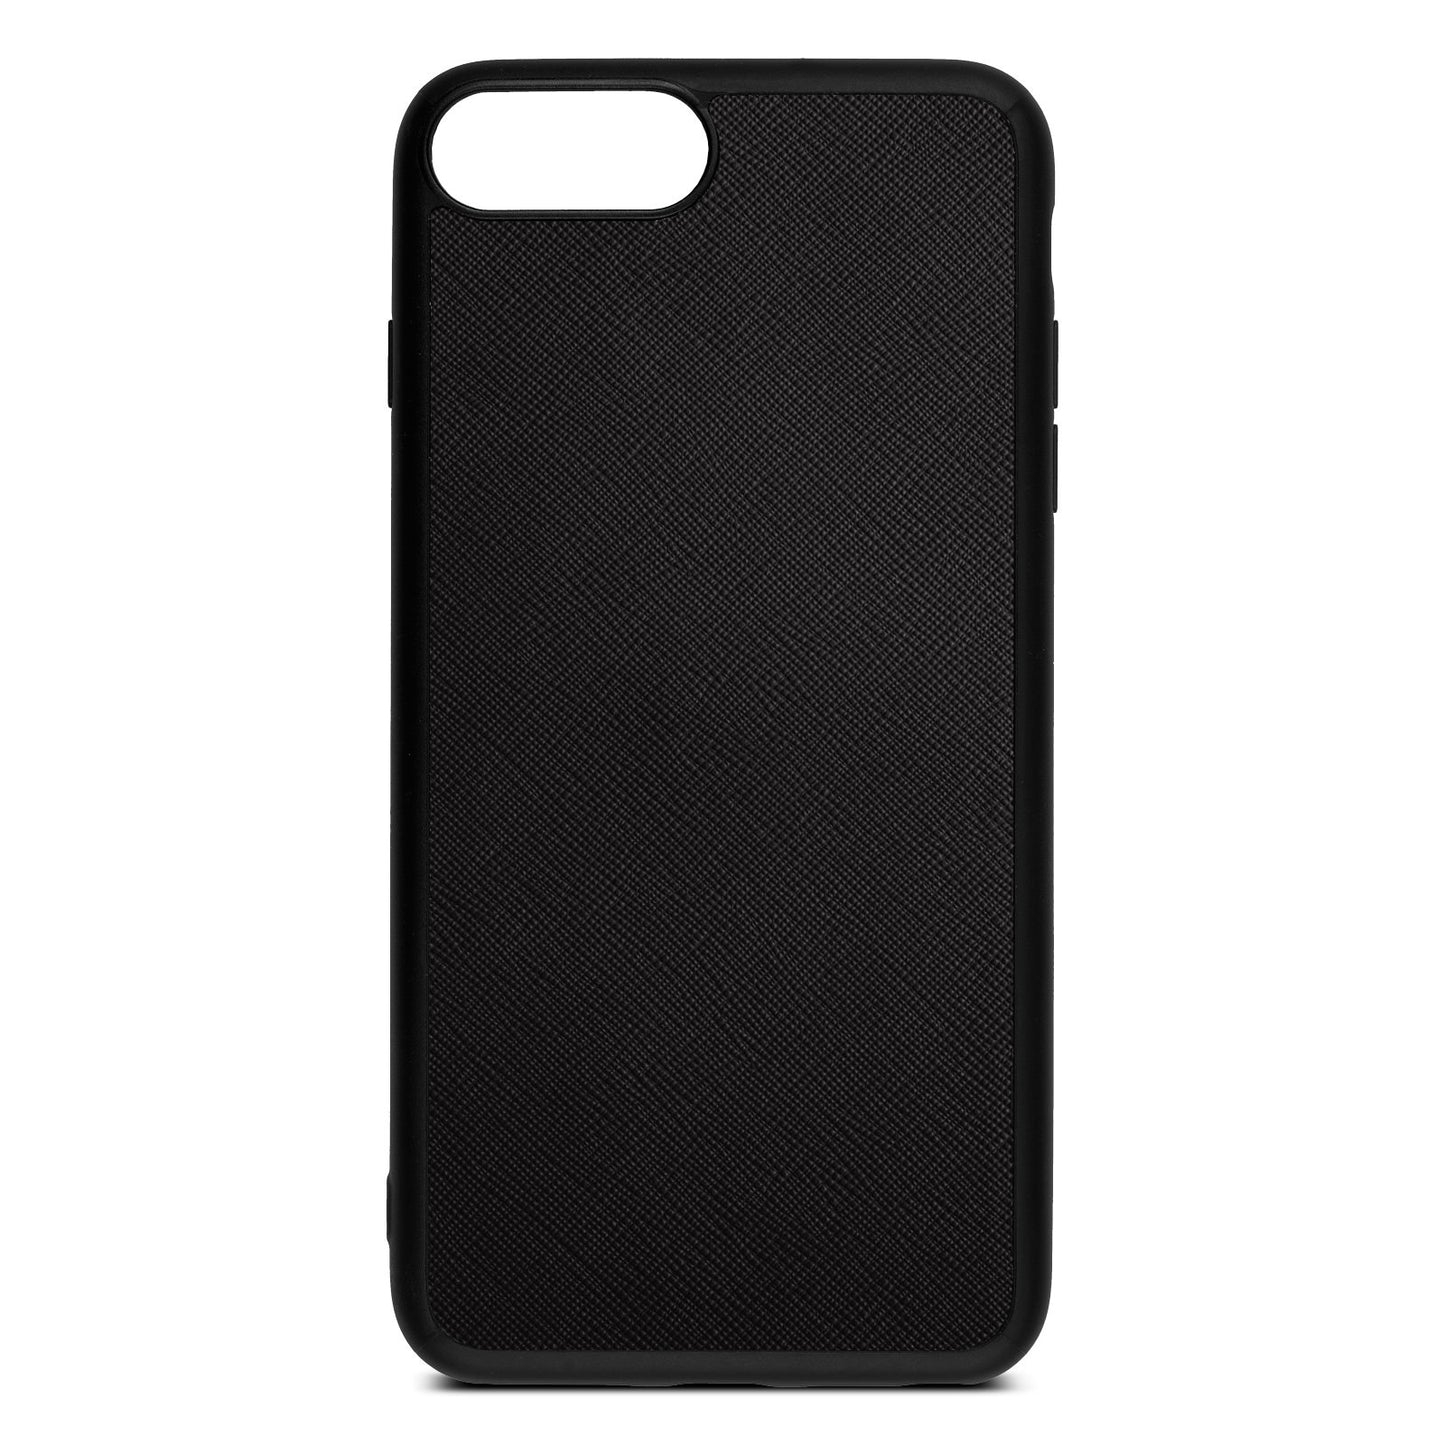 Blank iPhone 8 Plus Drop Shadow Black Leather Case